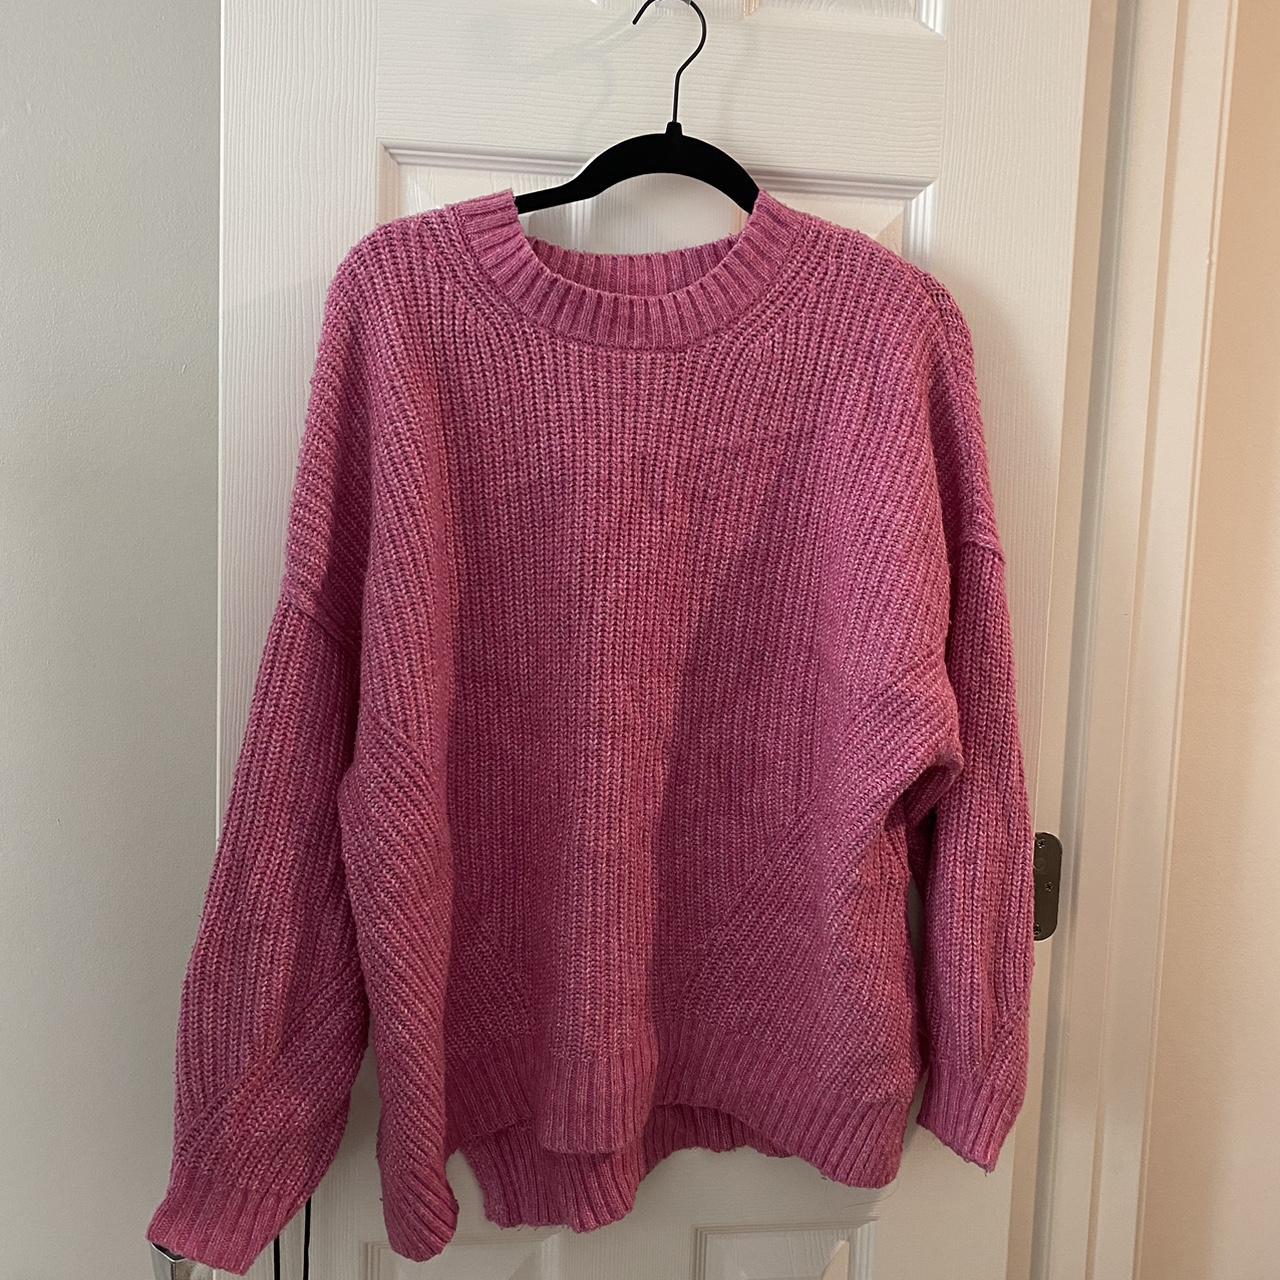 Oversized pink knit sweater- American eagle brand.... - Depop